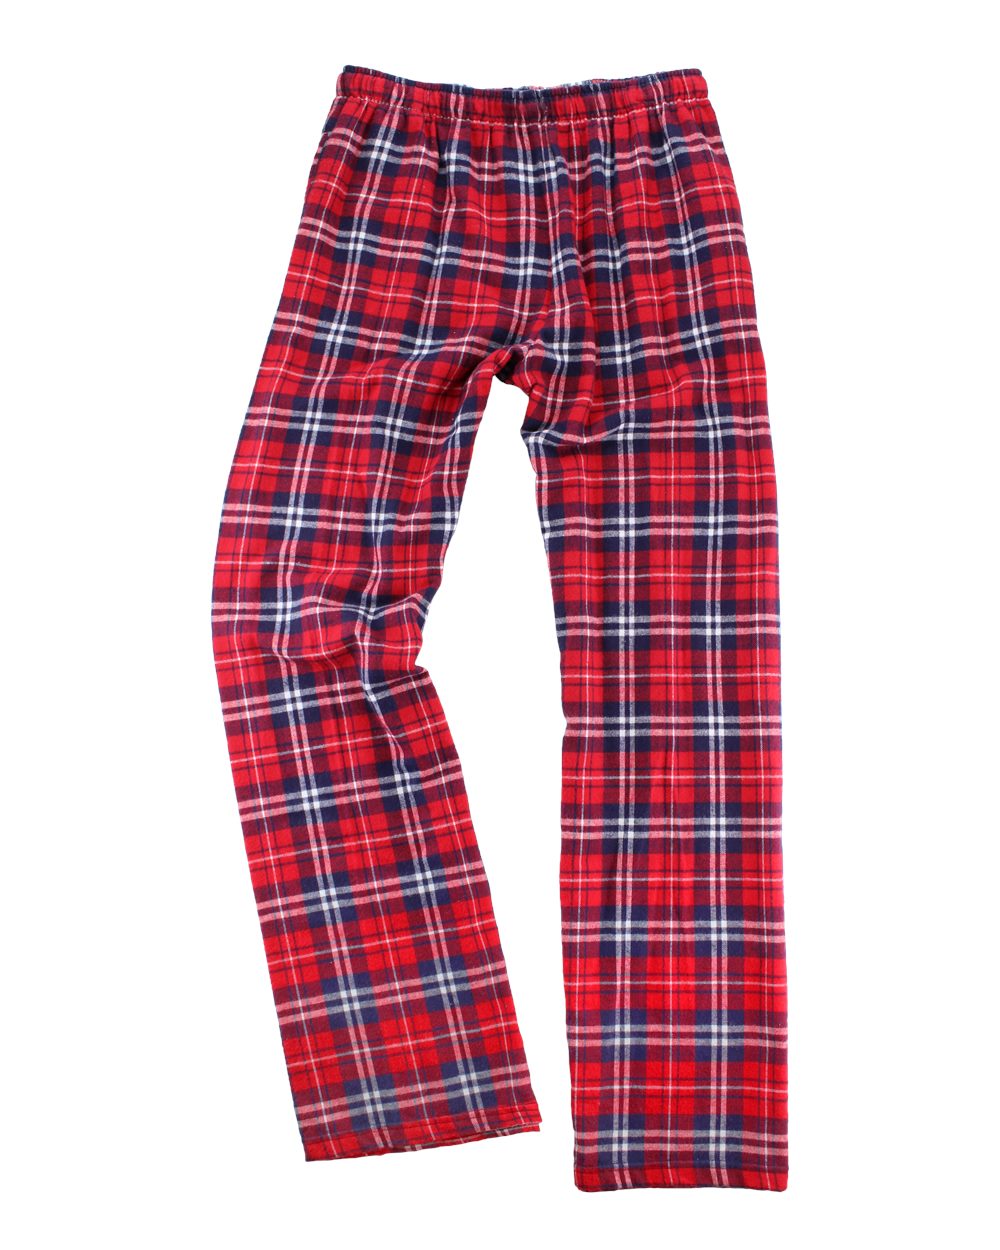 TINFL 15-18 Years Youth Big Boys Plaid Check Soft 100% Cotton Sleep Lounge Shorts Pajama Pants 